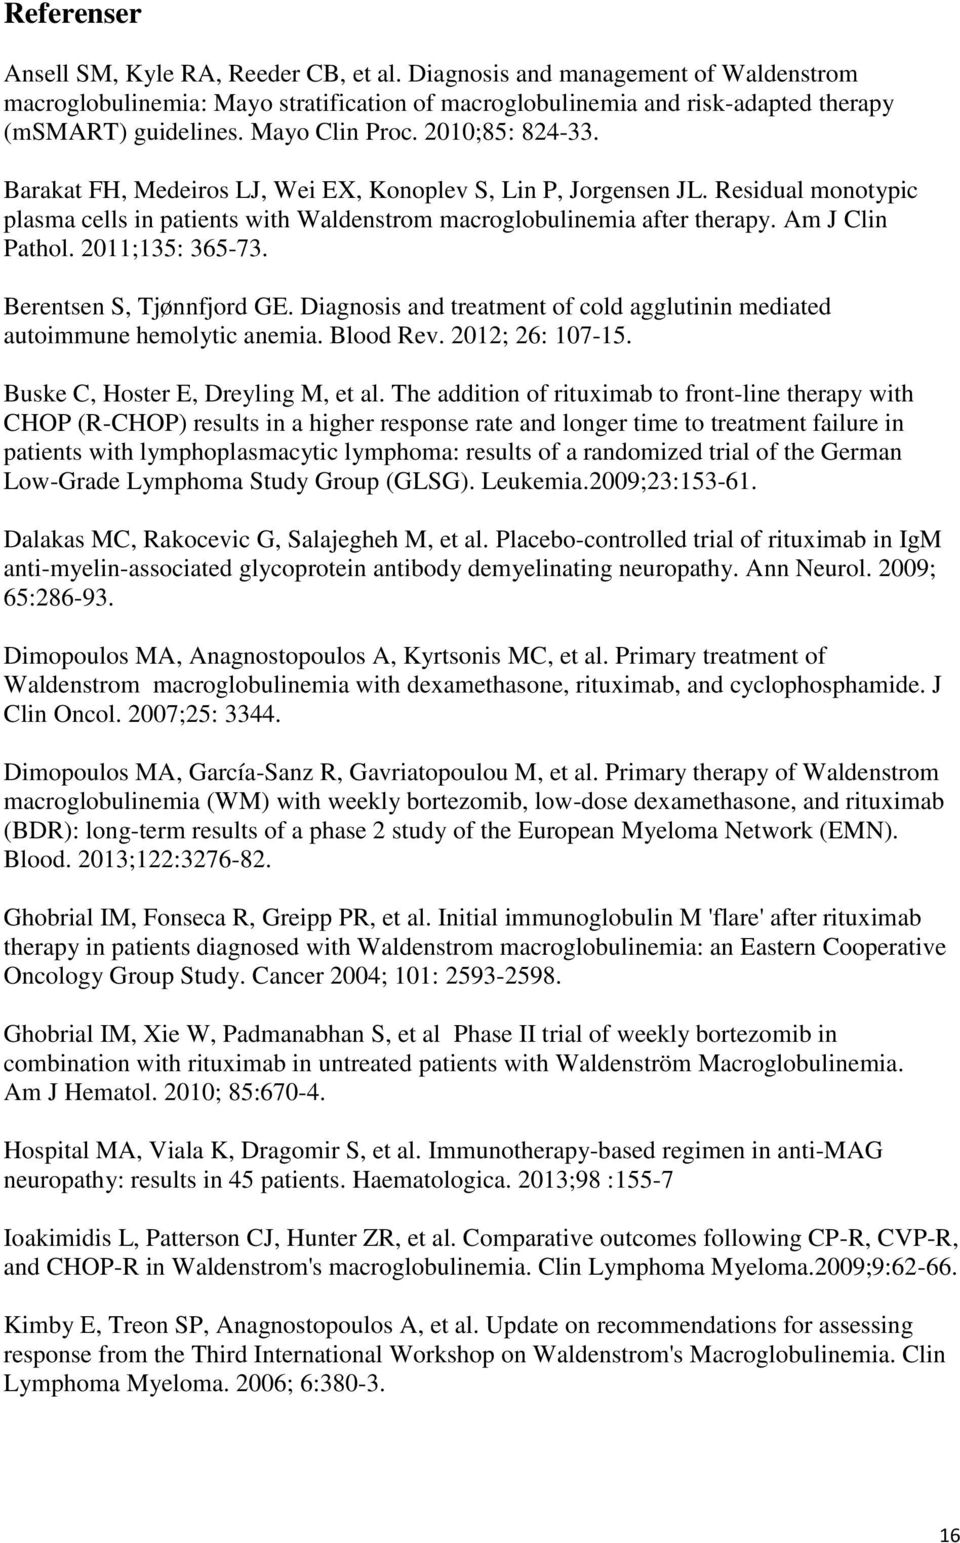 Am J Clin Pathol. 2011;135: 365-73. Berentsen S, Tjønnfjord GE. Diagnosis and treatment of cold agglutinin mediated autoimmune hemolytic anemia. Blood Rev. 2012; 26: 107-15.